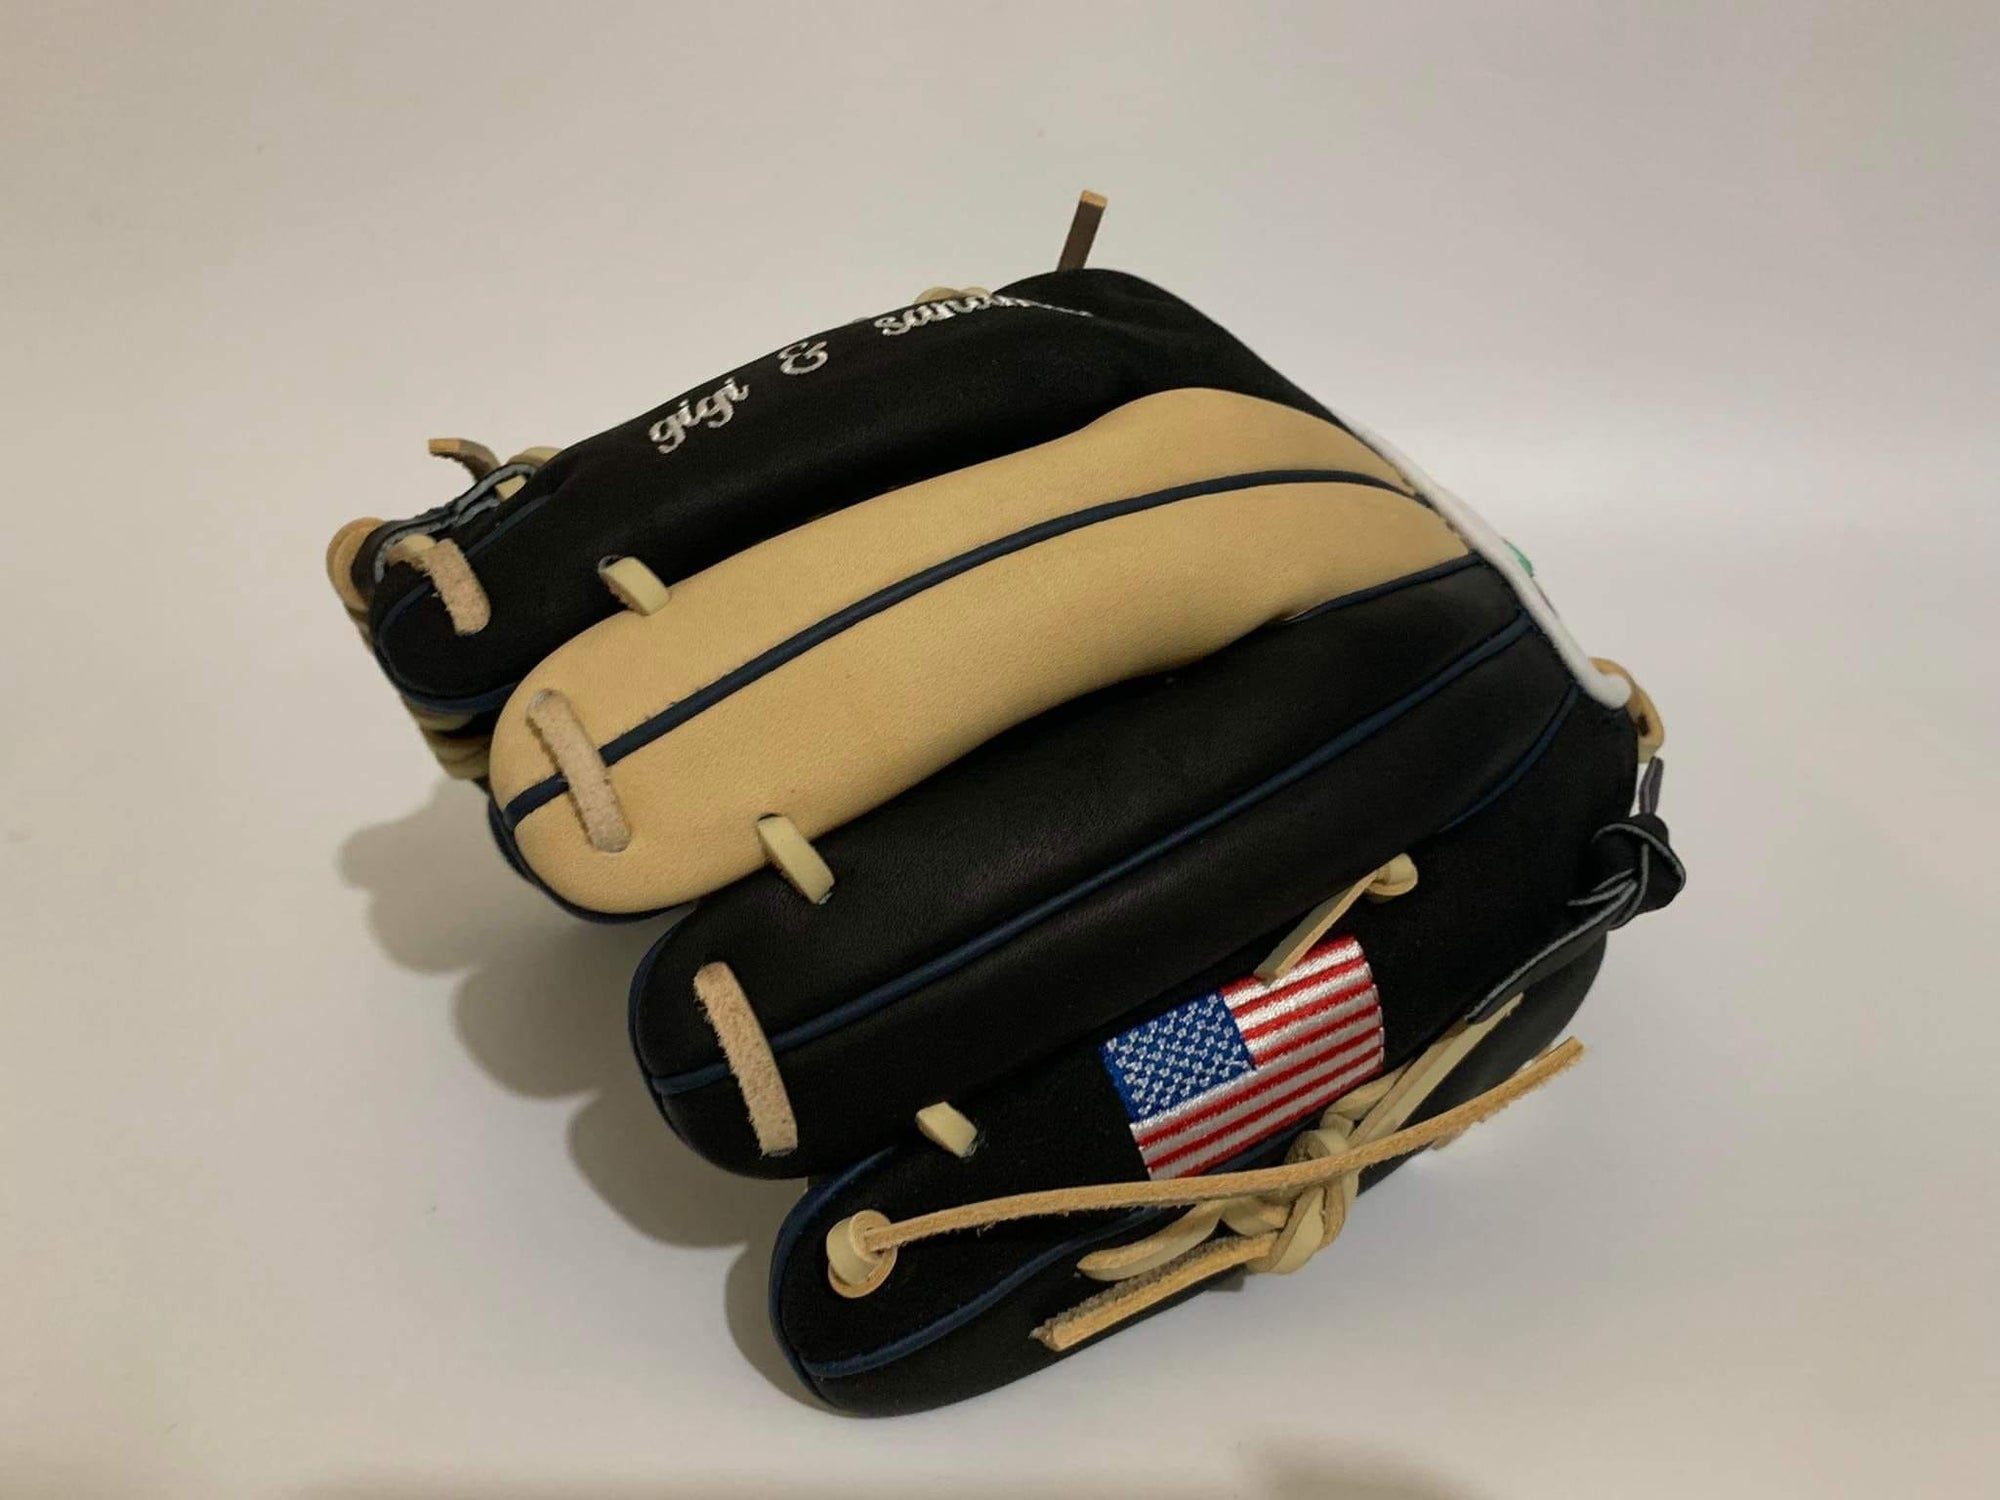 Do You Need A Baseball Glove Break-In Kit?